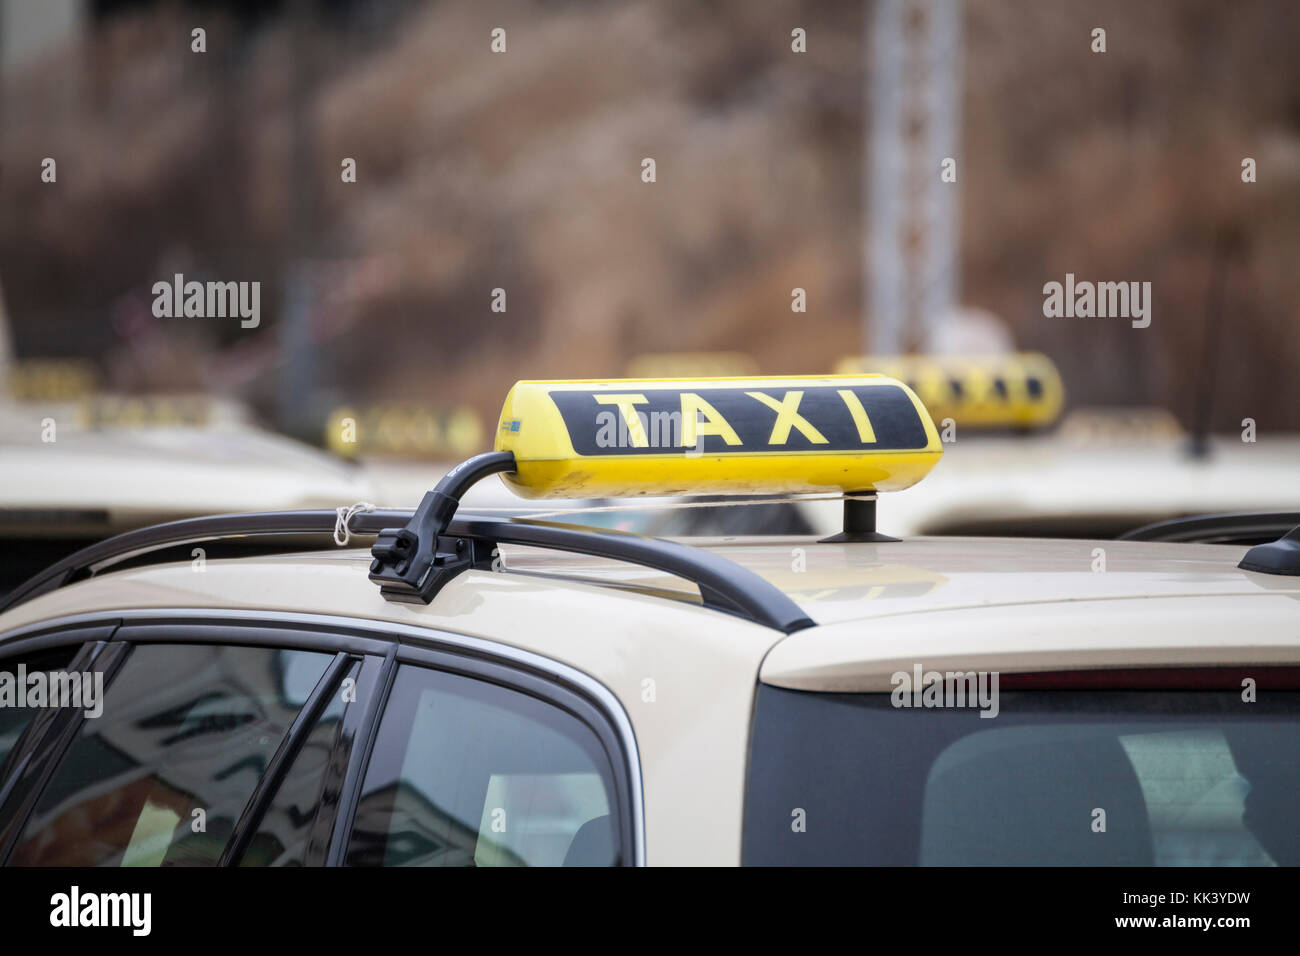 Taxischild Stockfoto